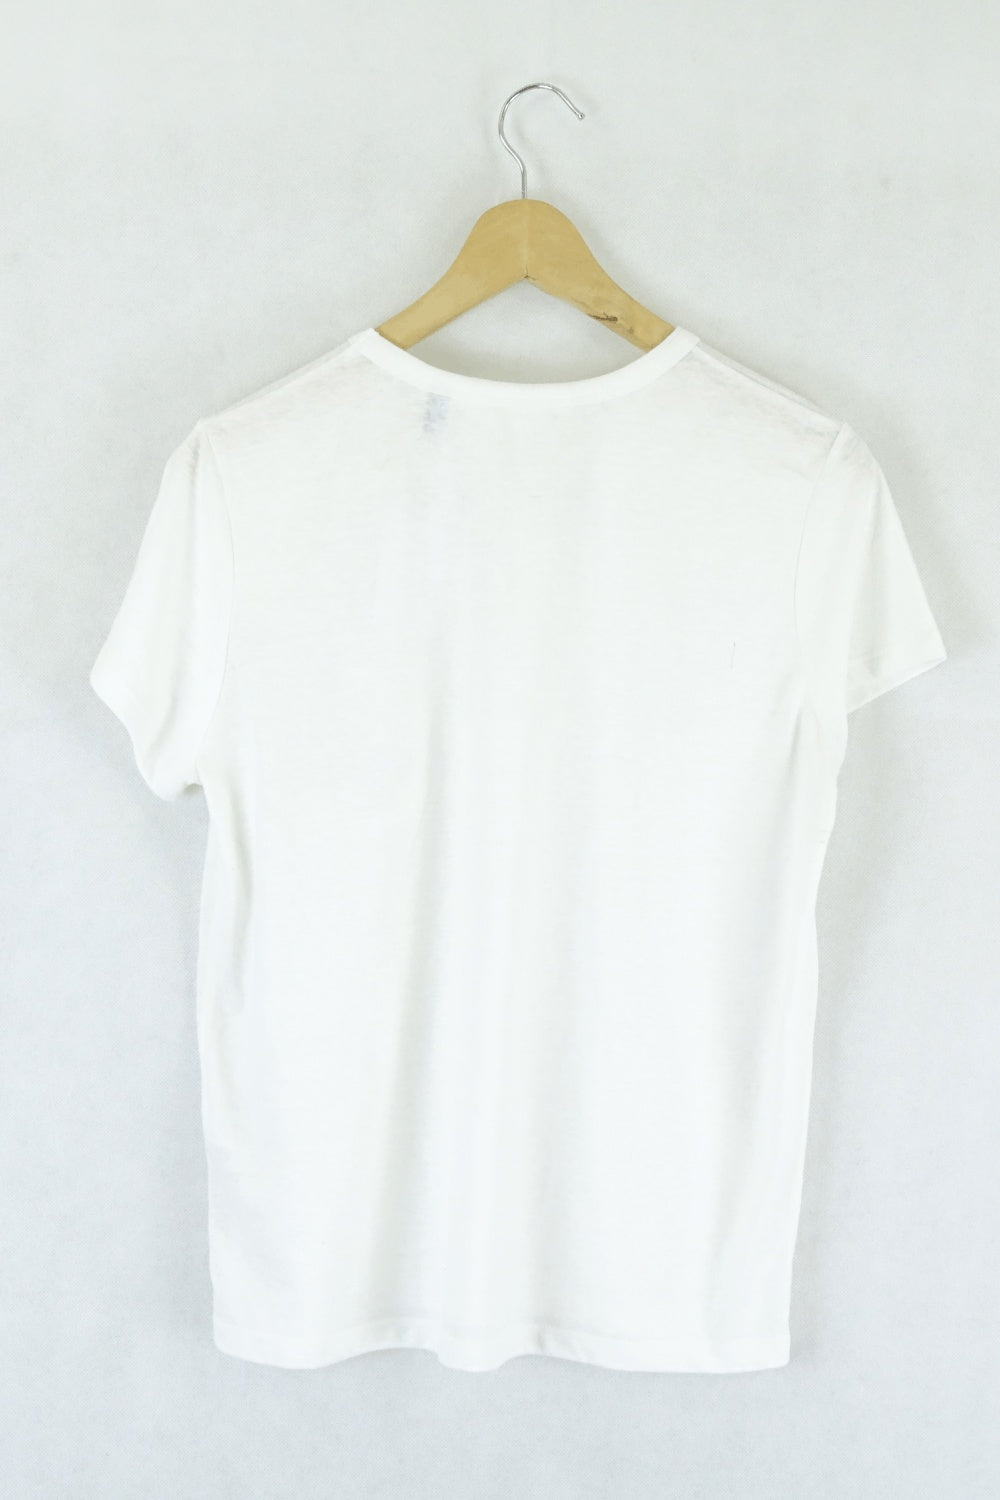 Topshop White T-shirt 14